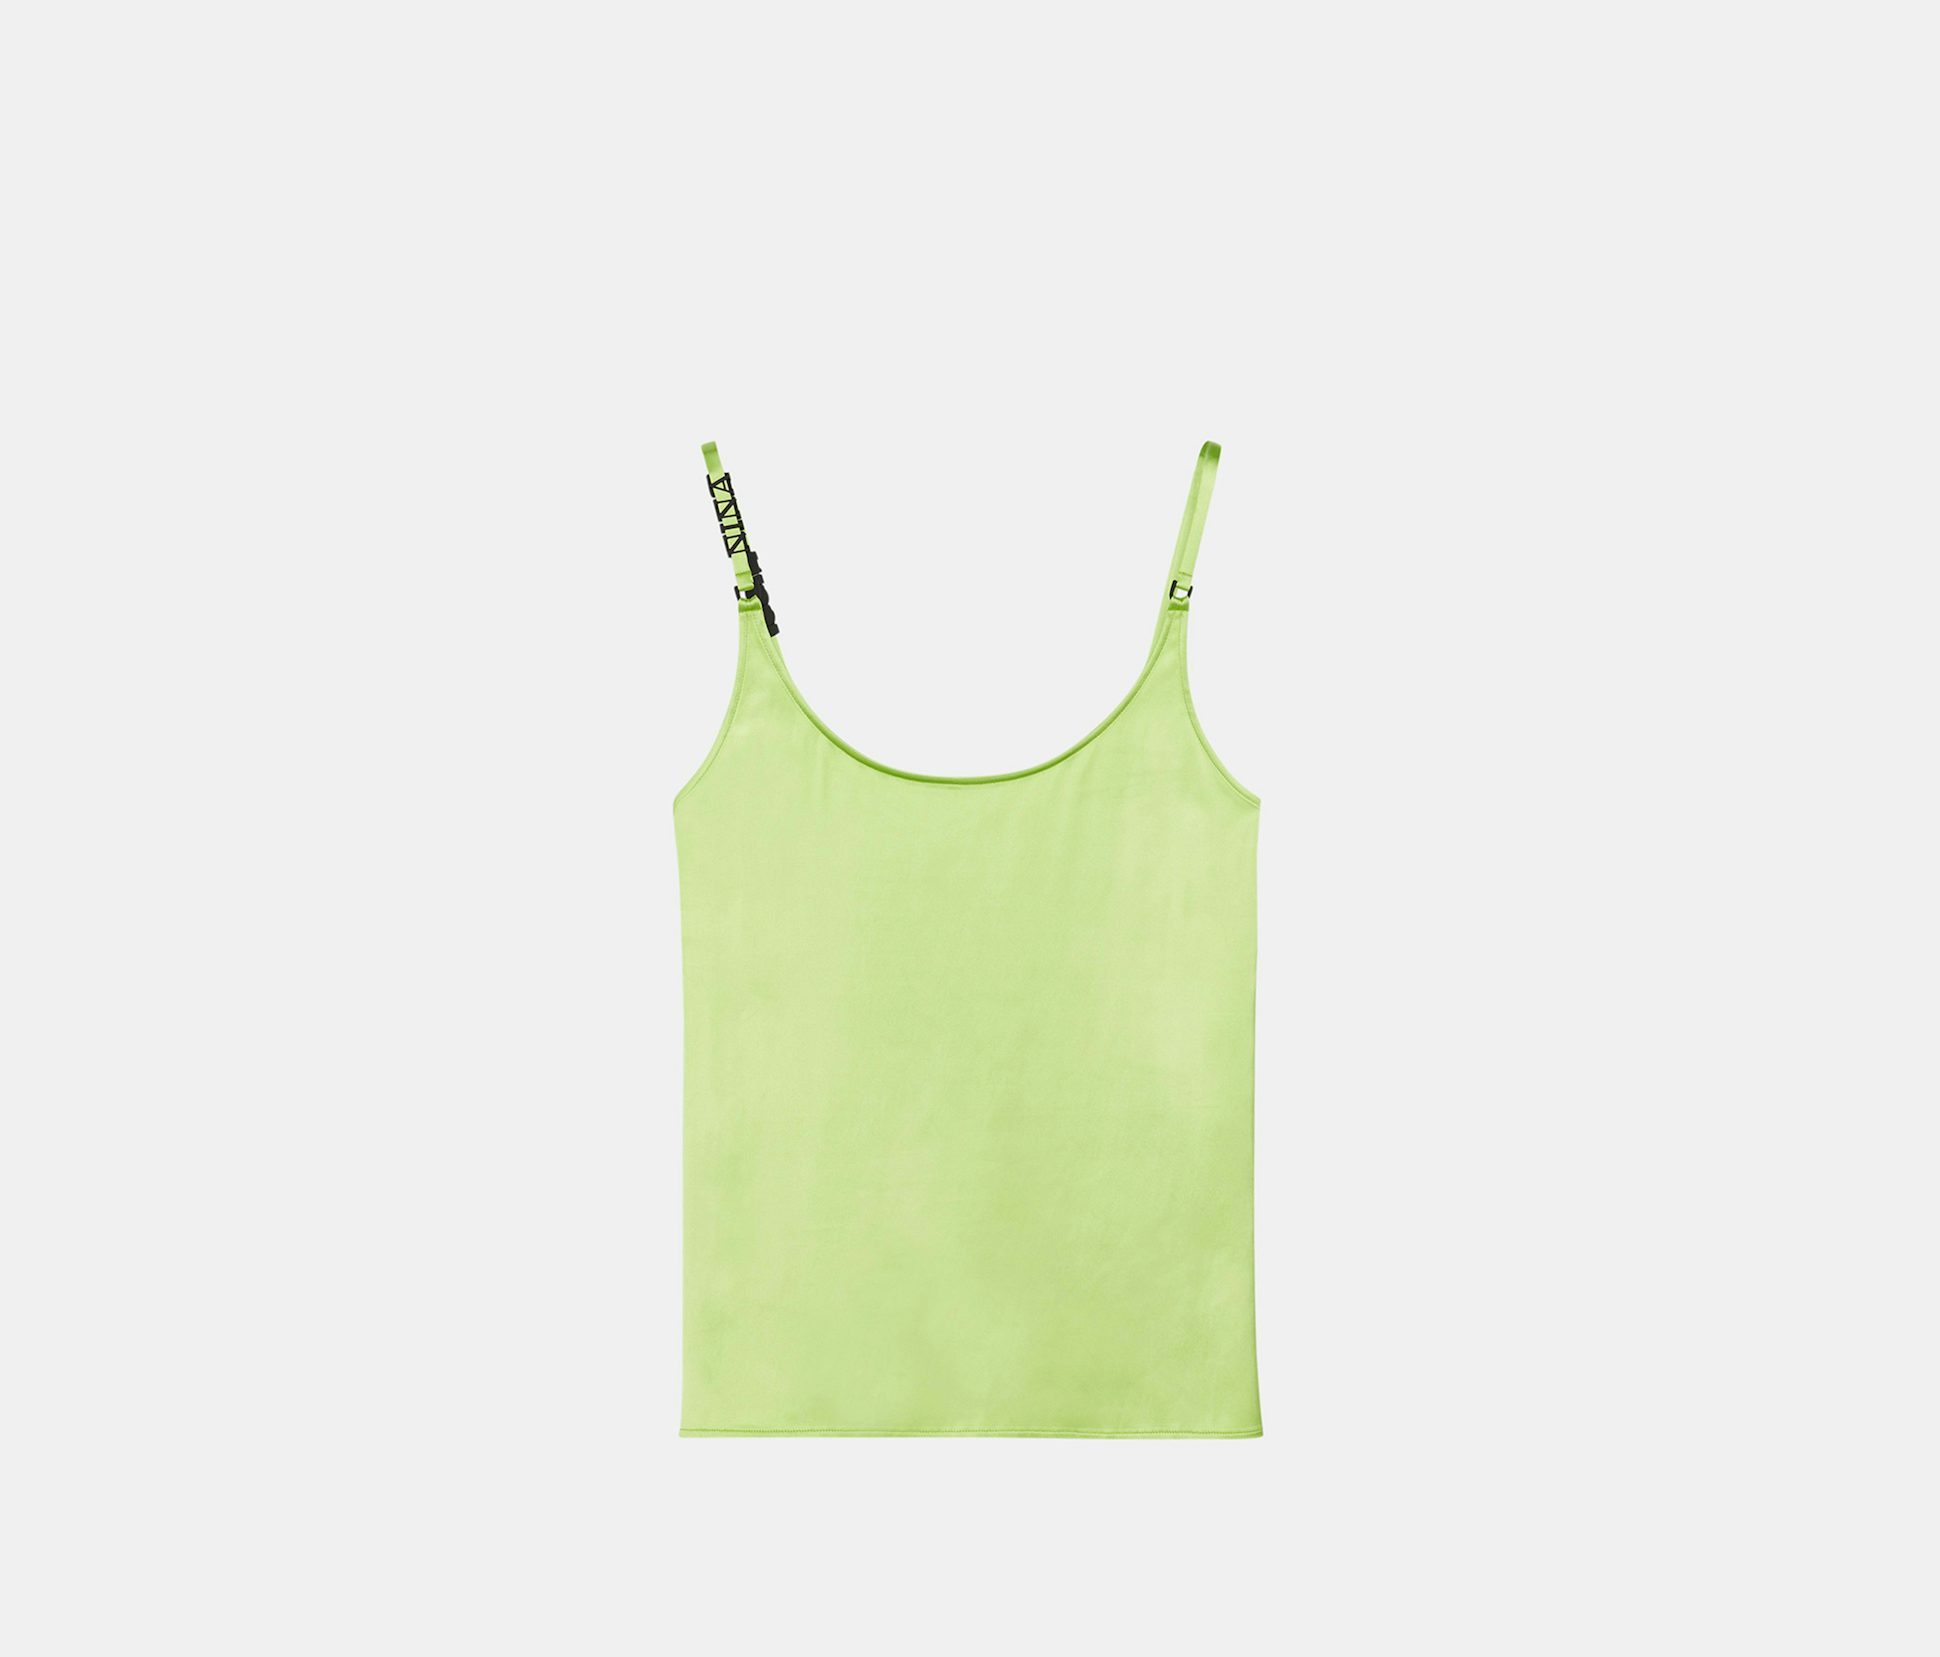 Green satin camisole zipped in the back with Nina Ricci logo on the shoulder strap - Nina Ricci